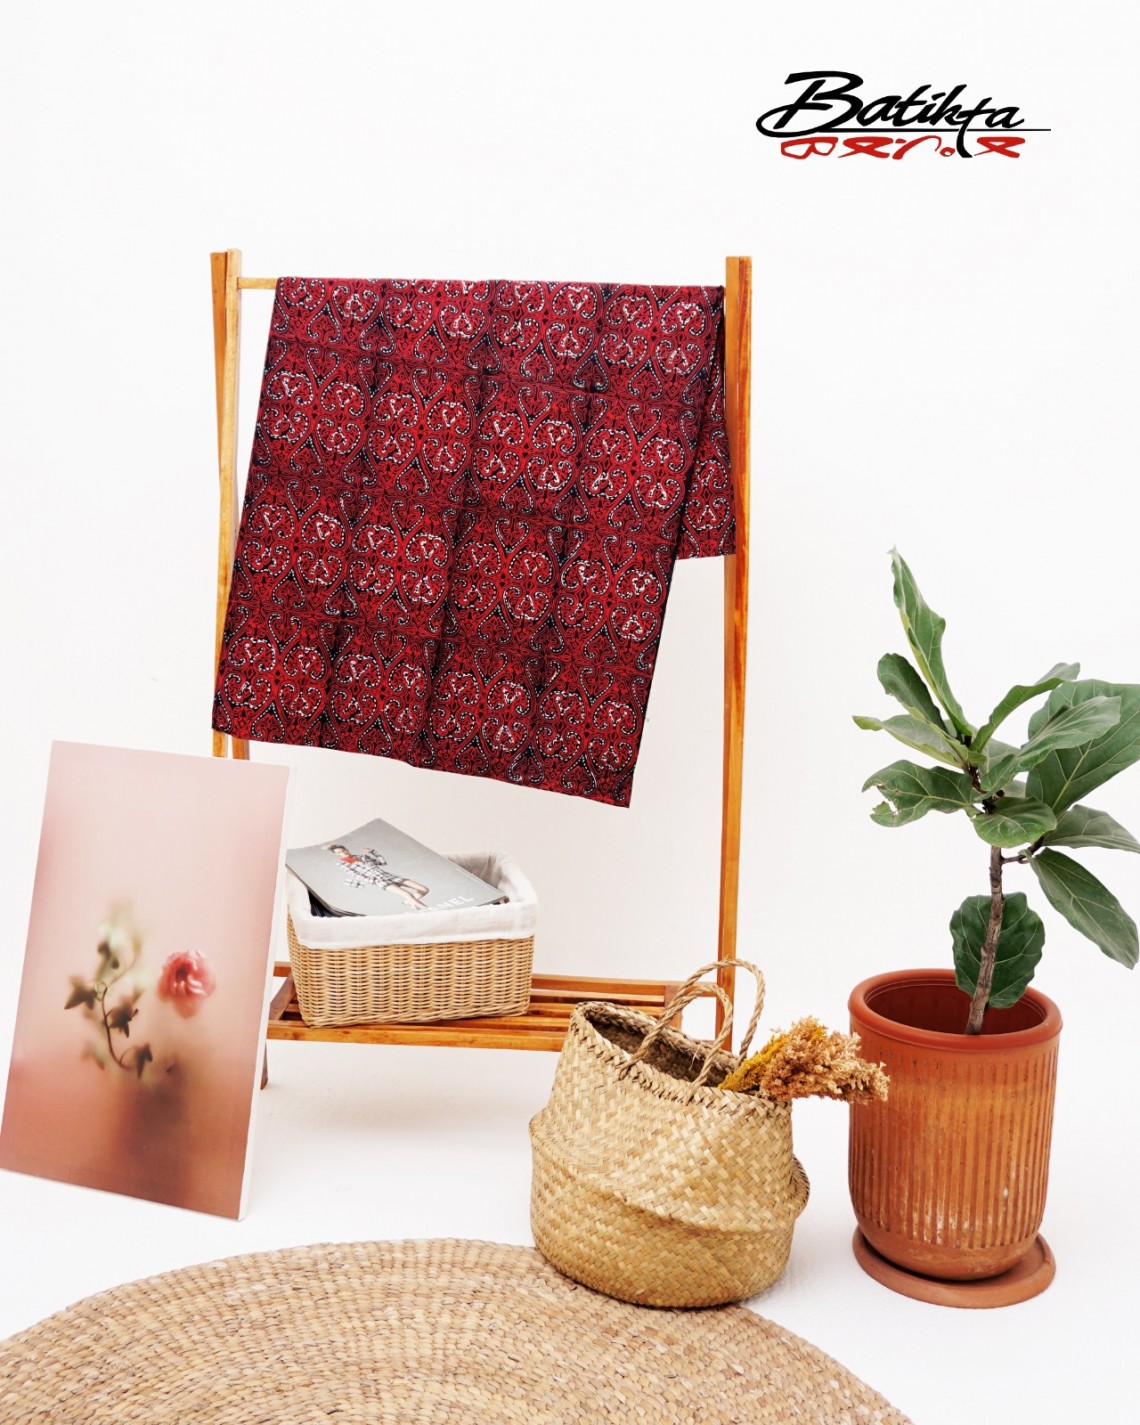 Katalog Produk Untuk Seragam Batik dan Souvenir Batikta